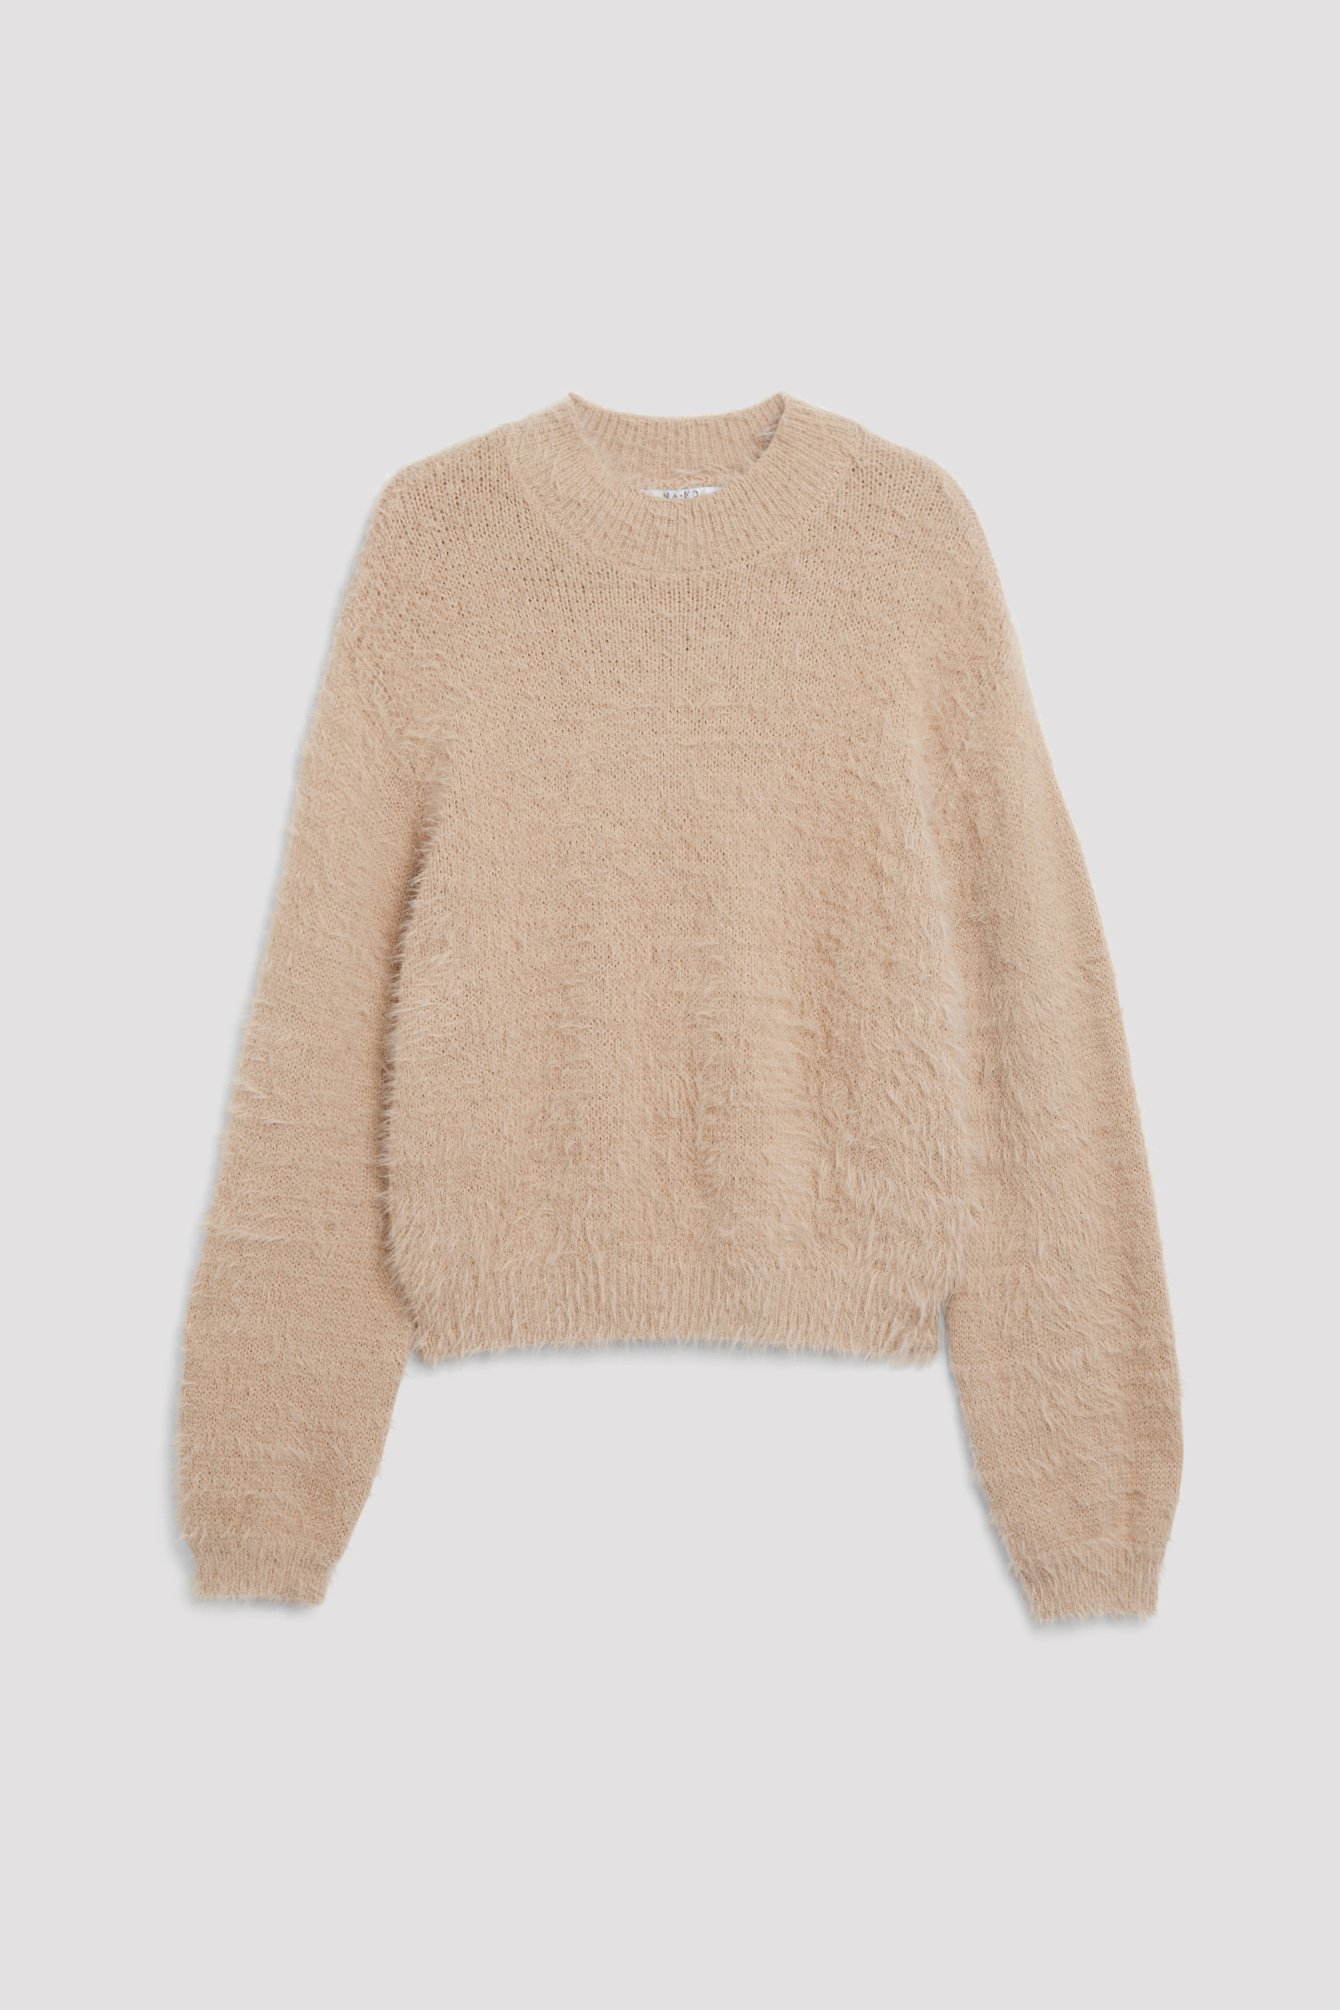 Beige Fuzzy Knitted Sweater